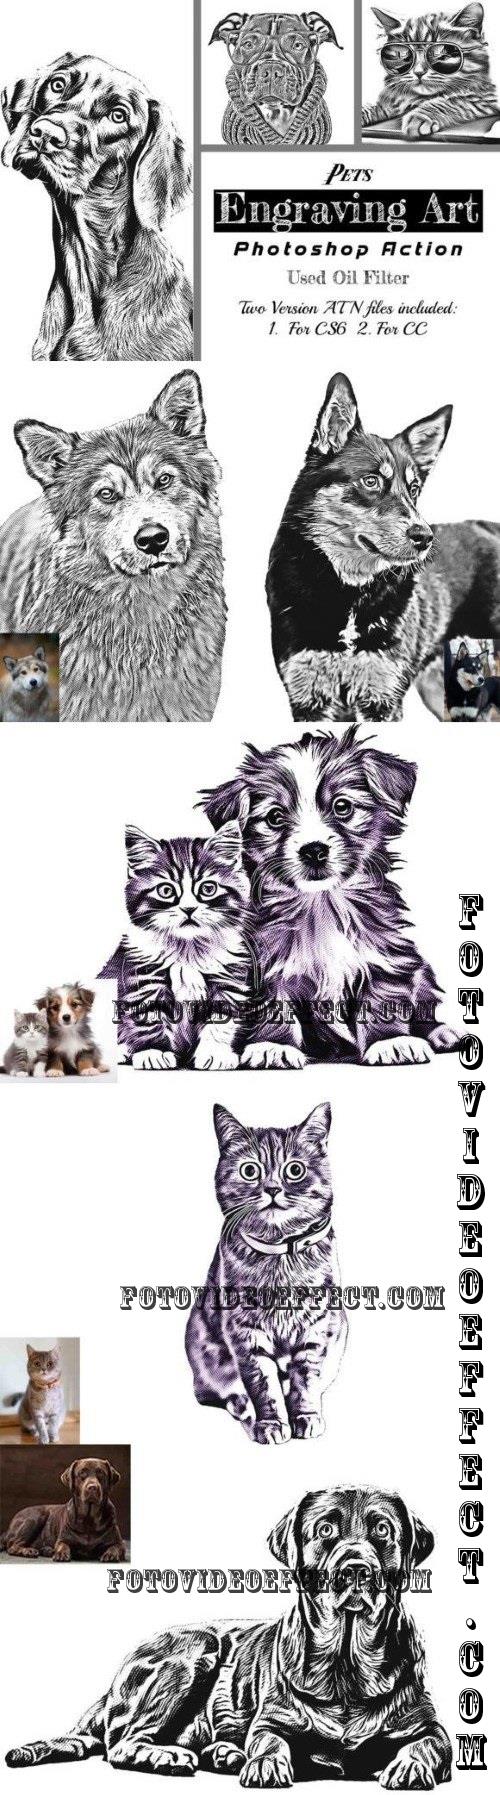 Pets Engraving Art Photoshop Action - 92032571